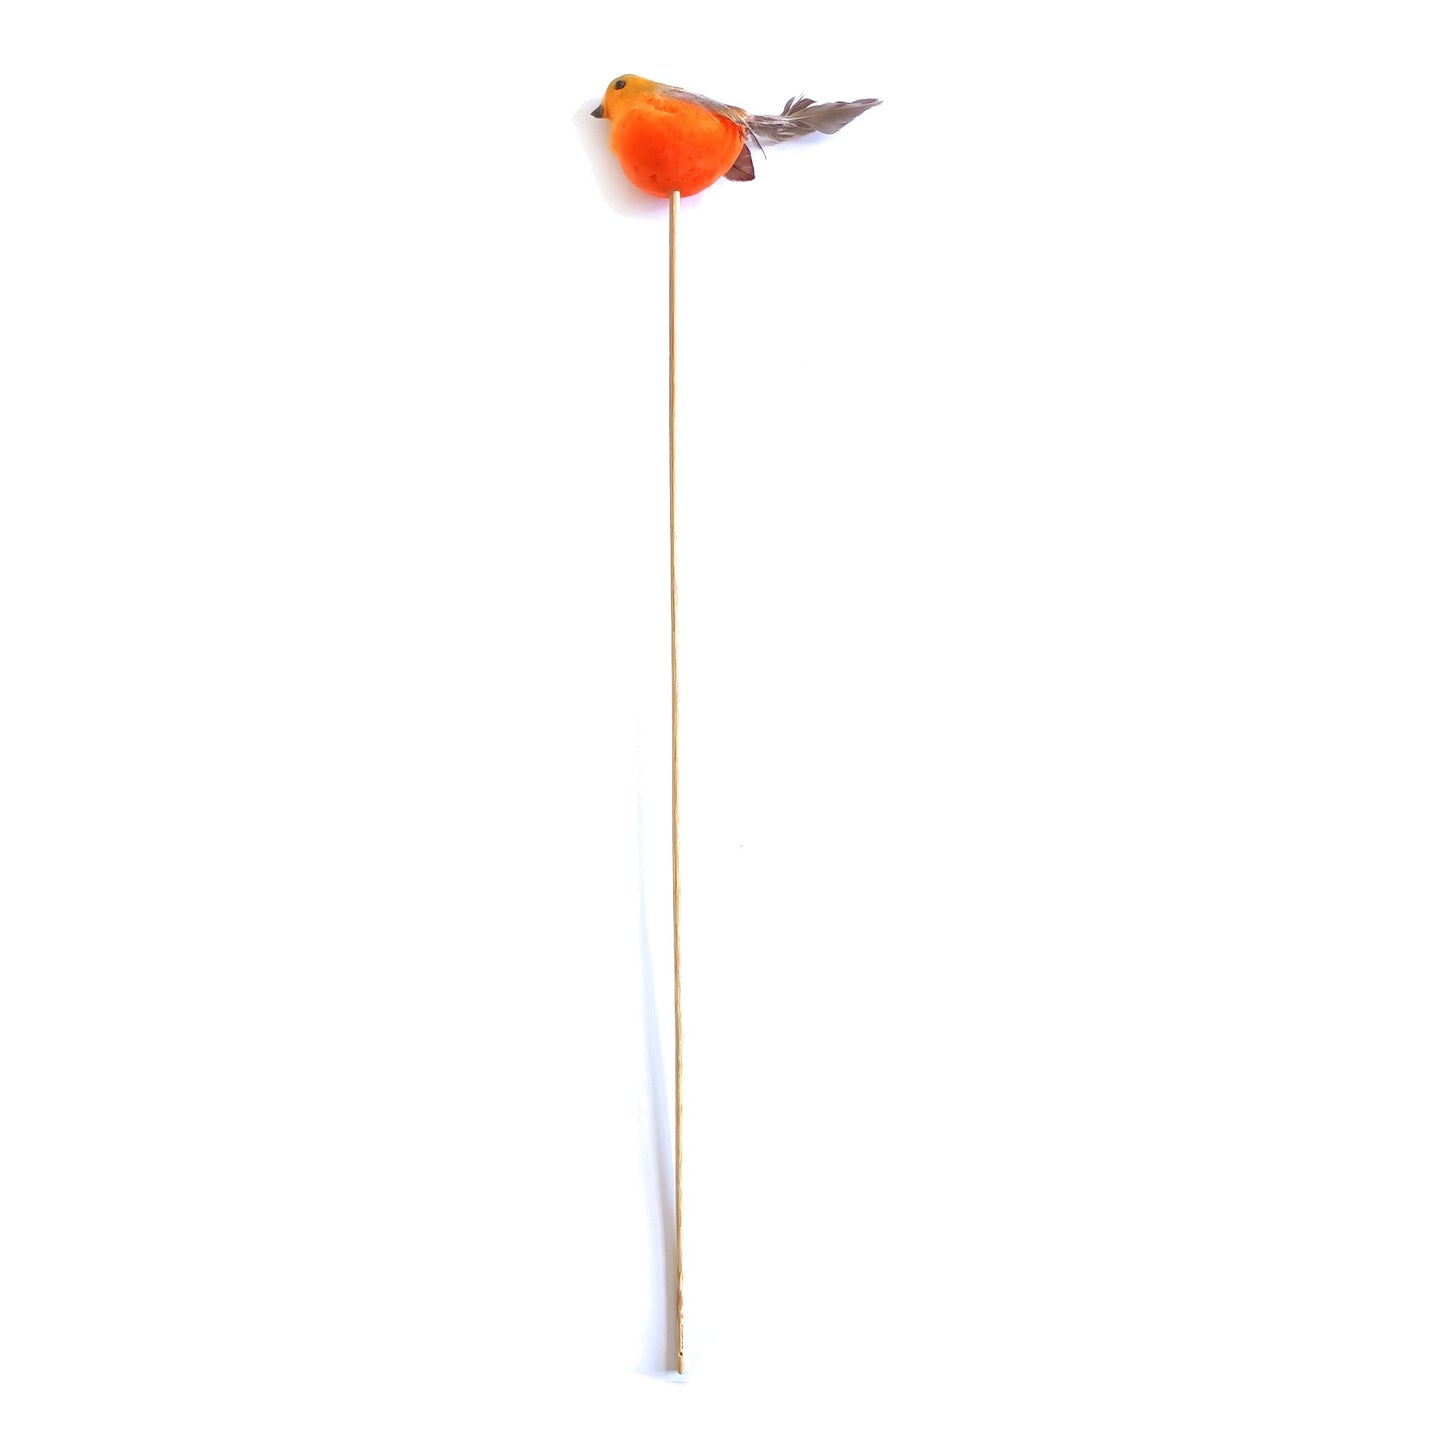 Red Robin on Stick Decoration